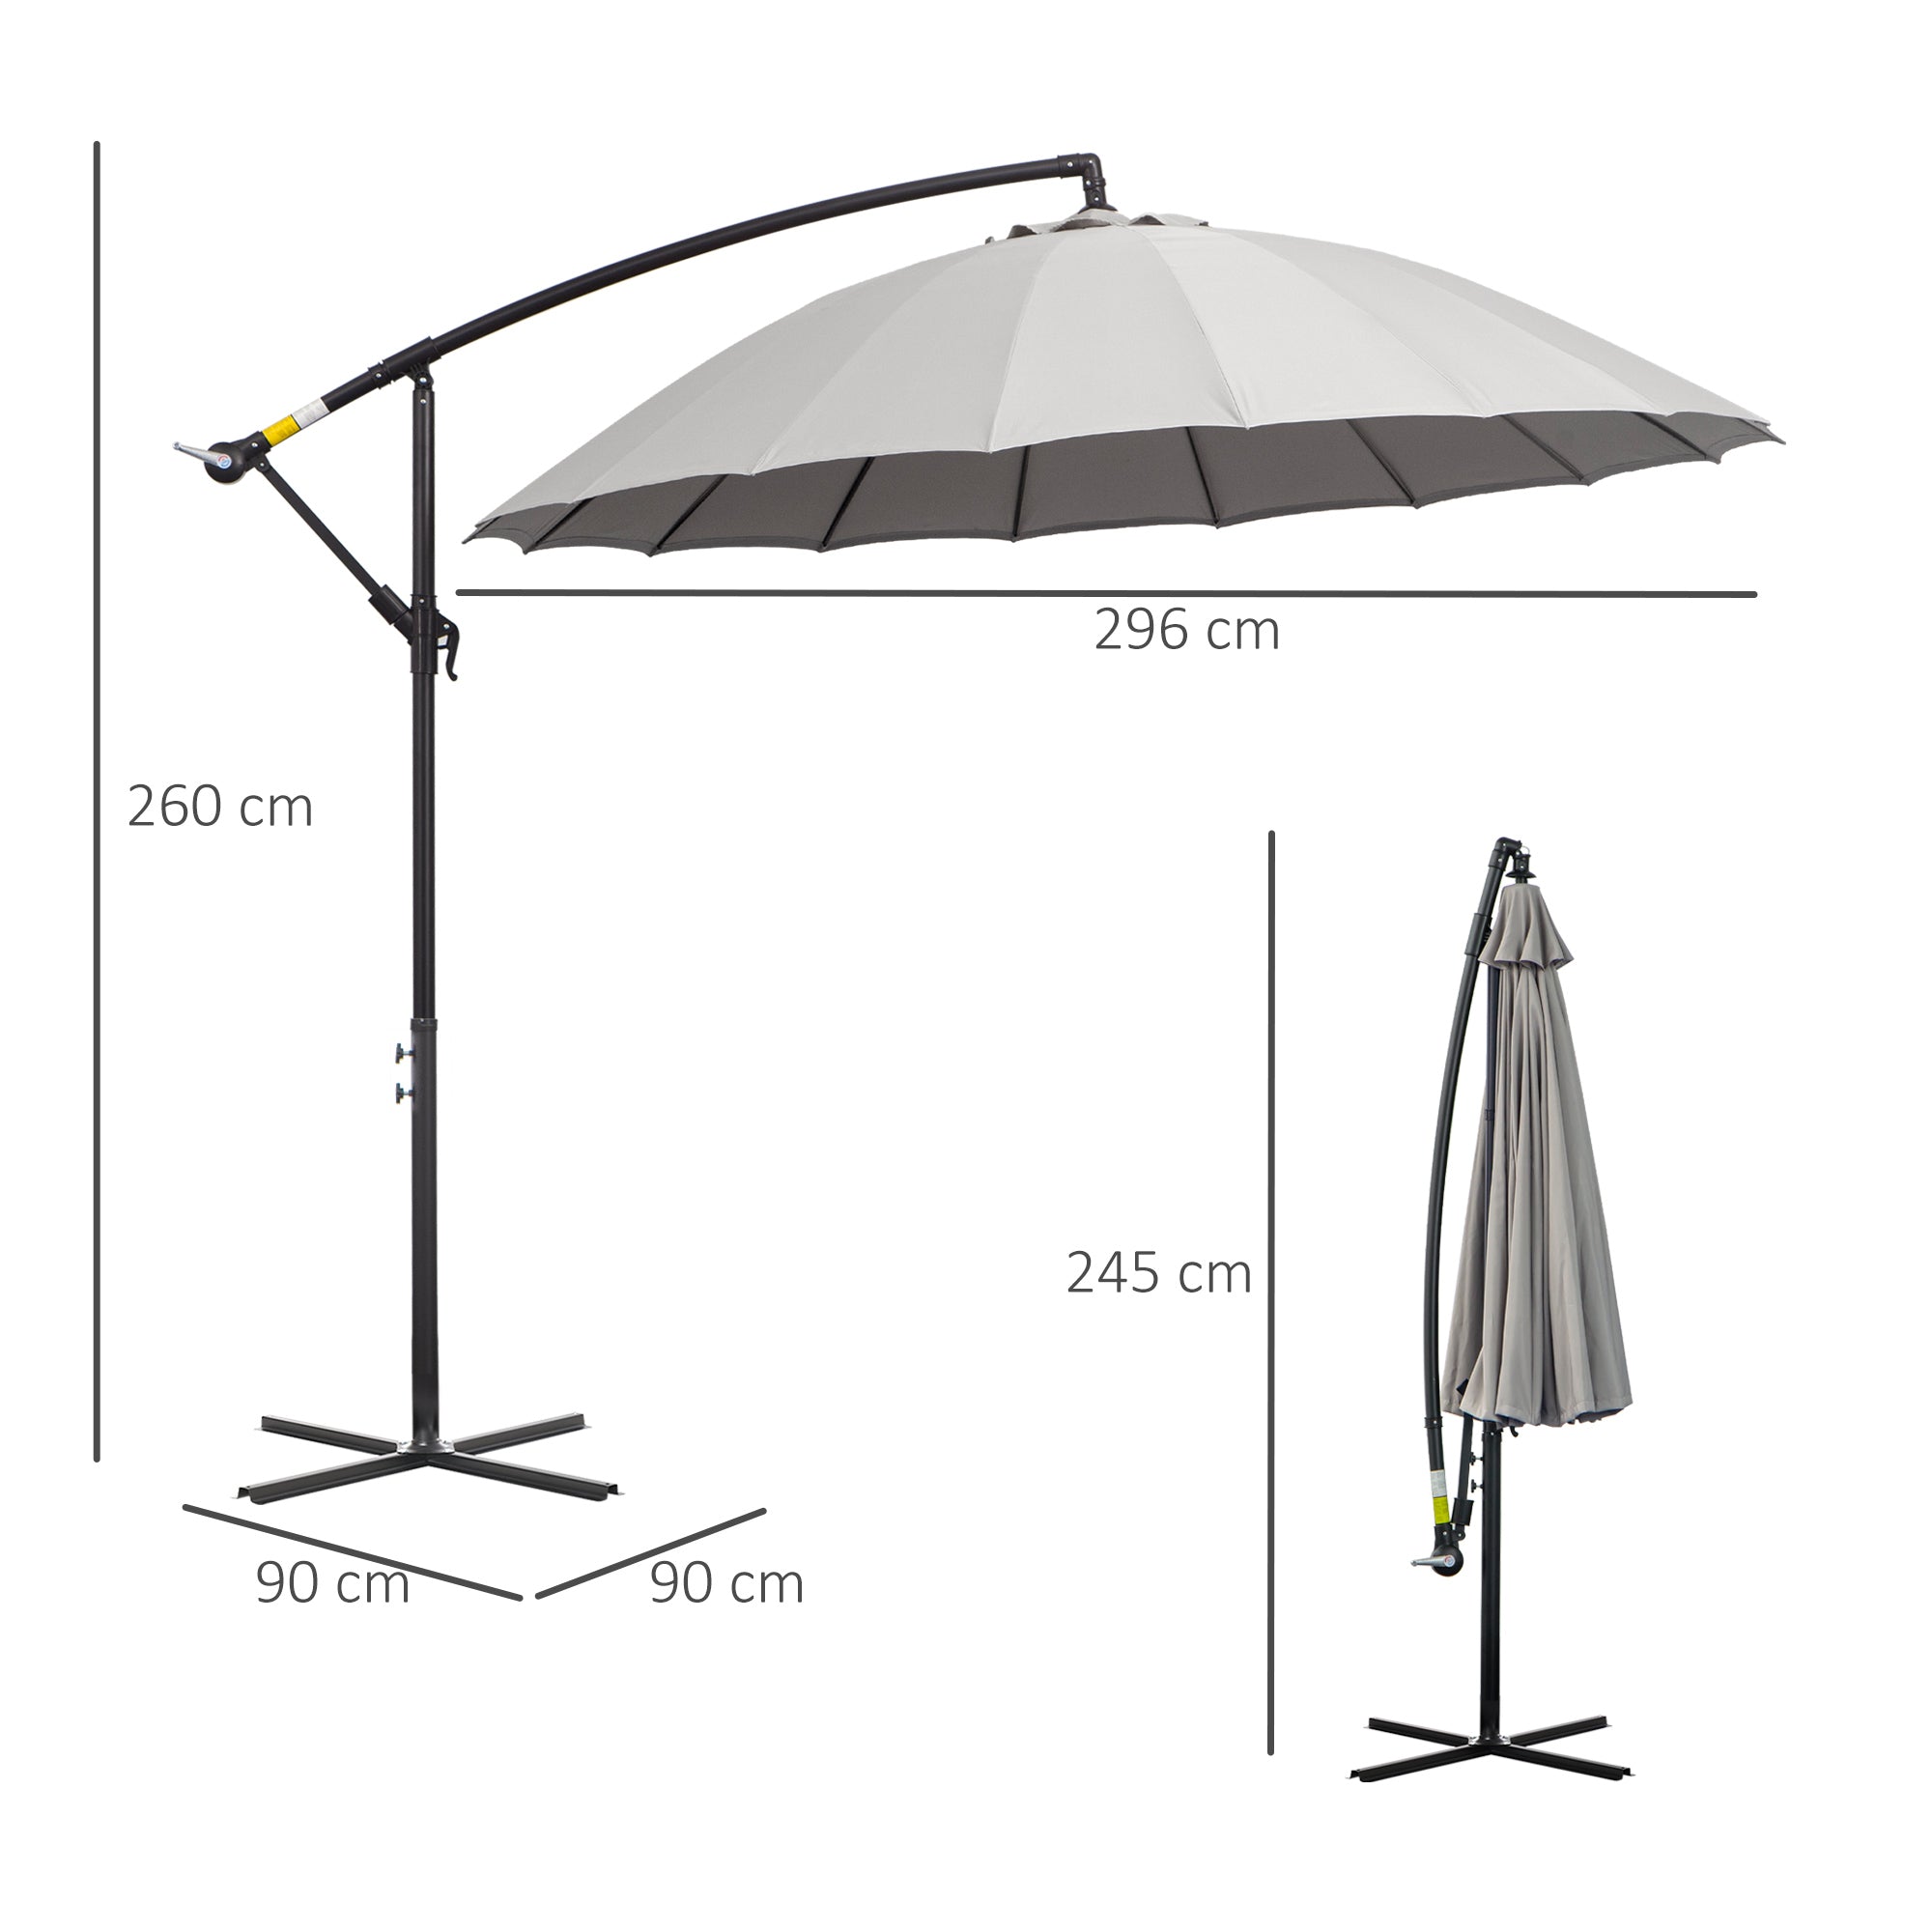 3(m) Cantilever Garden Hanging Banana Sun Umbrella with Crank Handle, 18 Sturdy Ribs and Cross Base, Grey-2